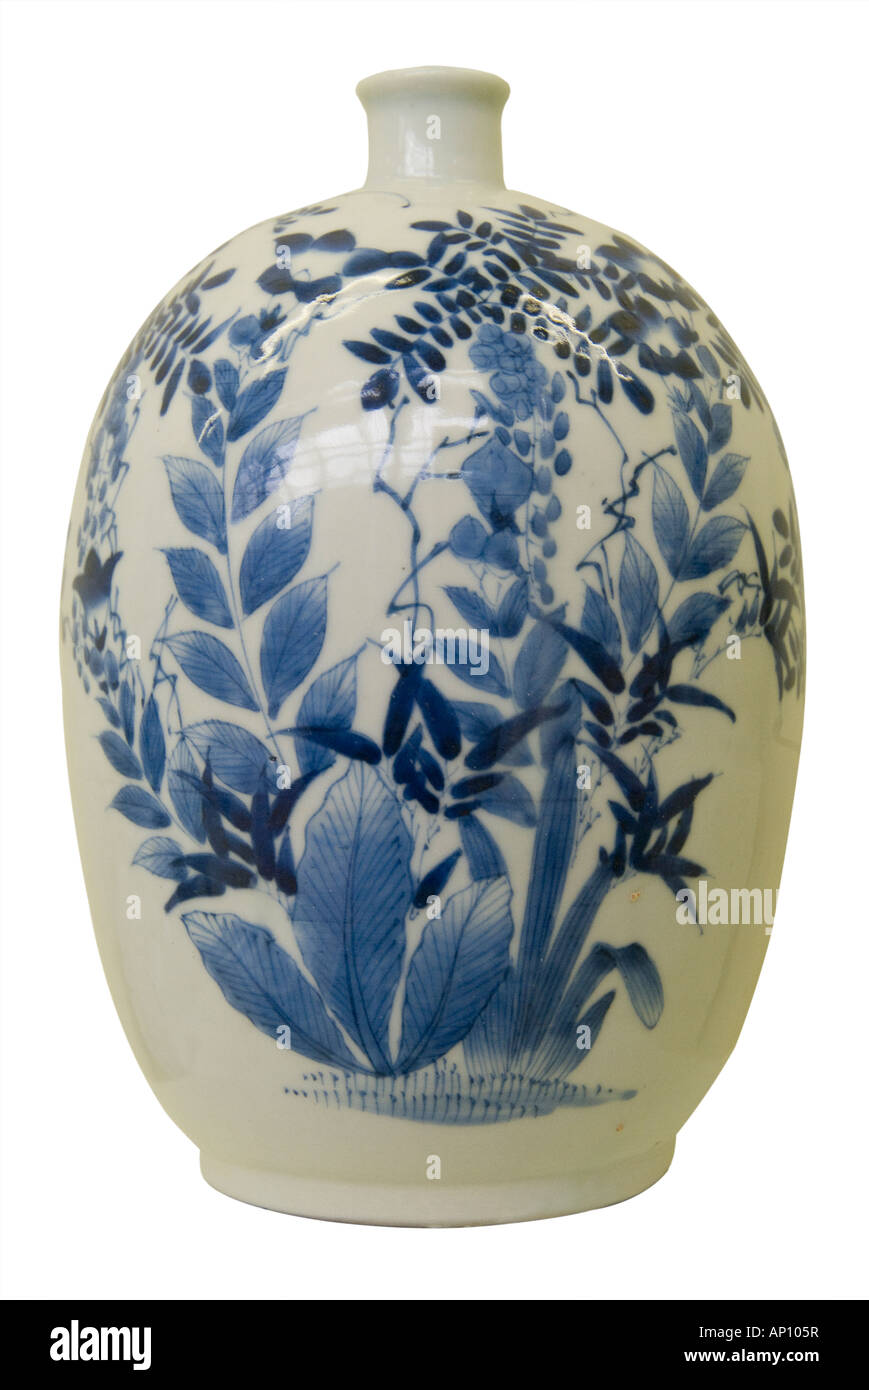 Edo period 1600 1868 vase blue floral design east India company Japan export porcelain family kiln enameled under glazed blue ov Stock Photo